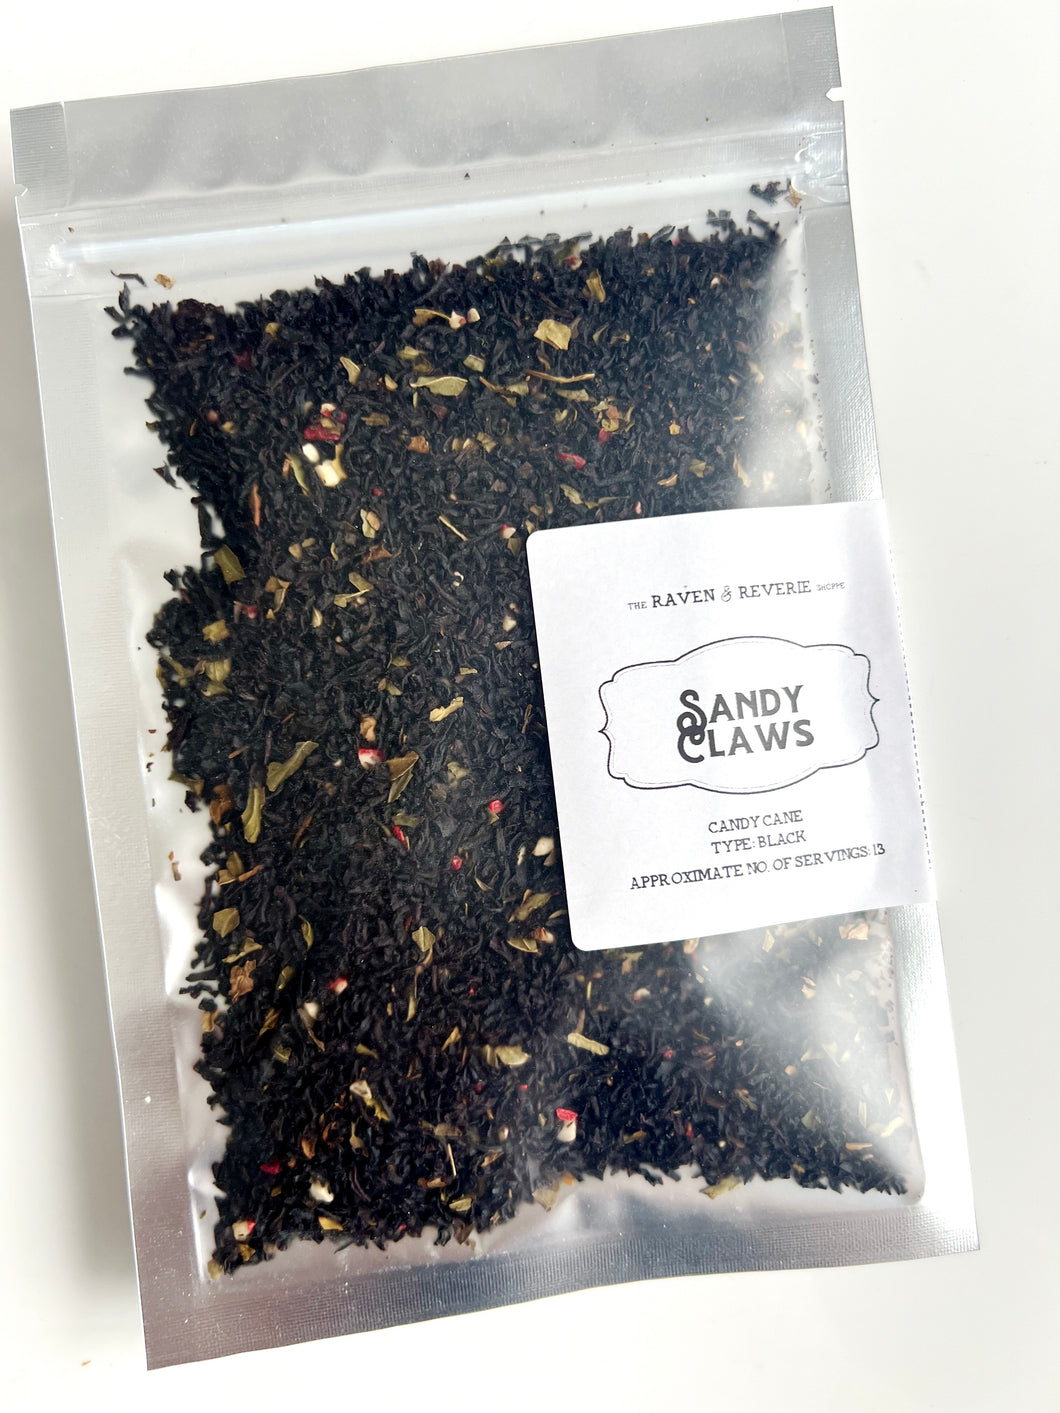 Sandy Claws -  candy cane black loose leaf tea